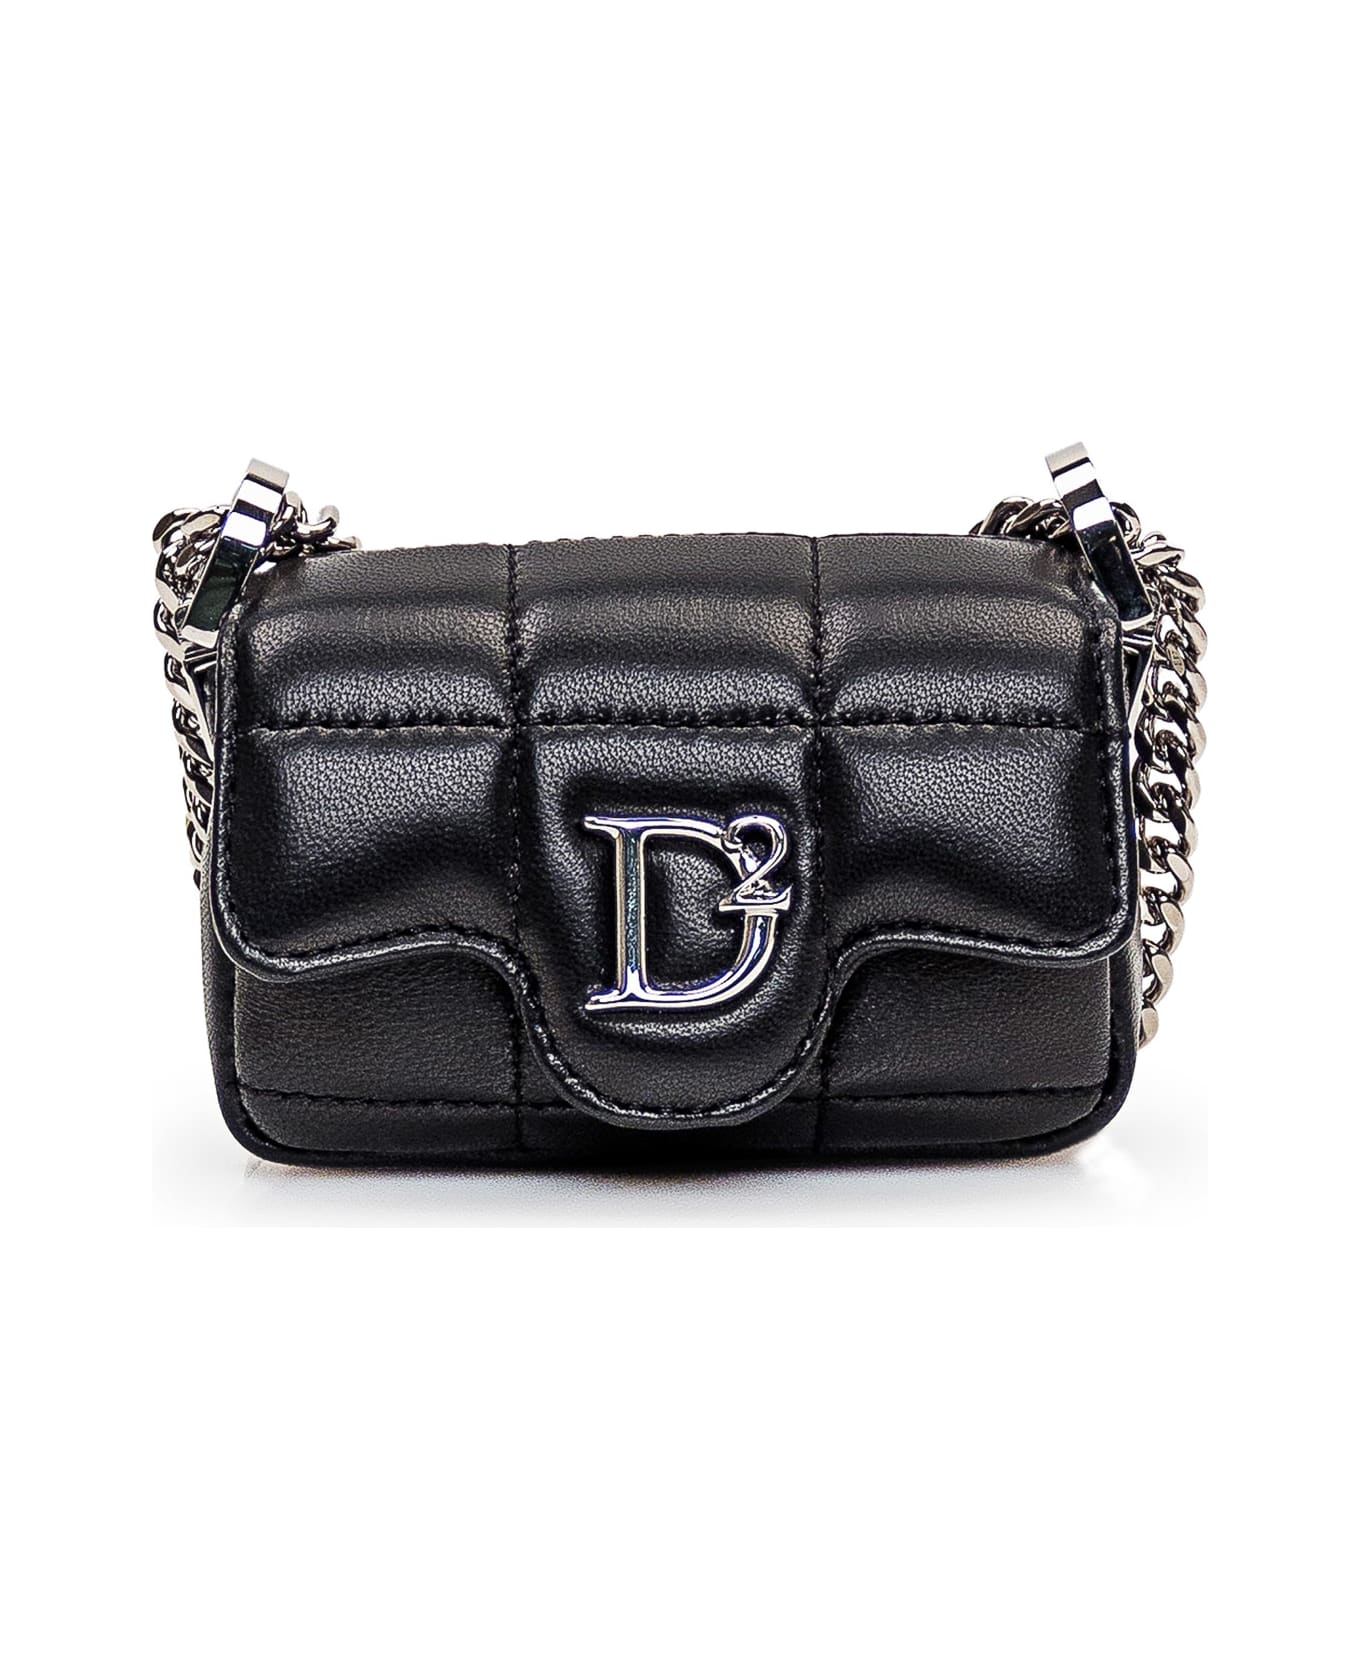 Dsquared2 Leather Shoulder Bag - NERO PALLADIO